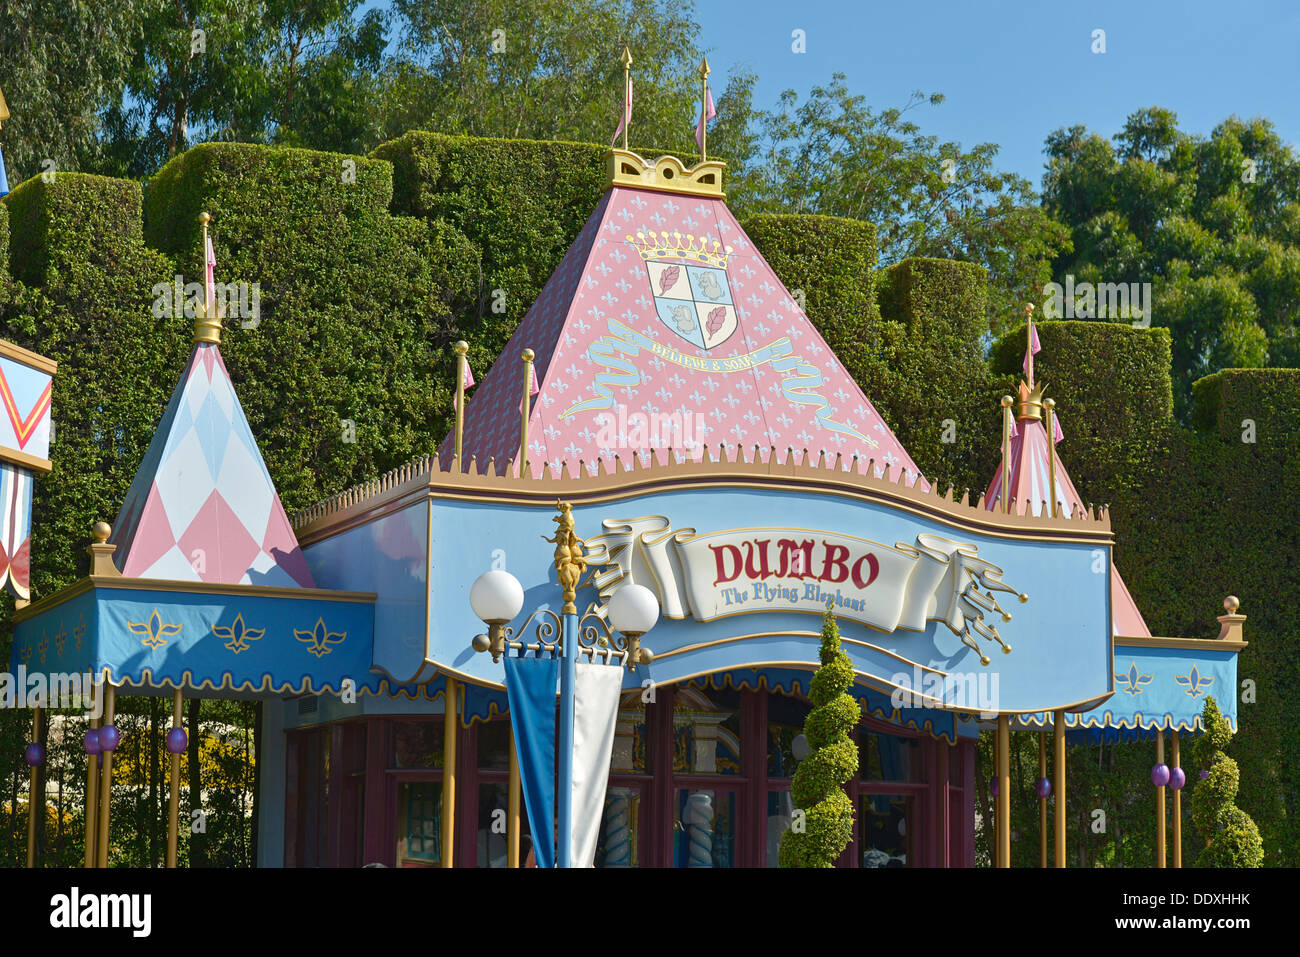 disneyland-dumbo-the-flying-elephant-circus-tent-magic-kingdom-fantasyland-DDXHHK.jpg